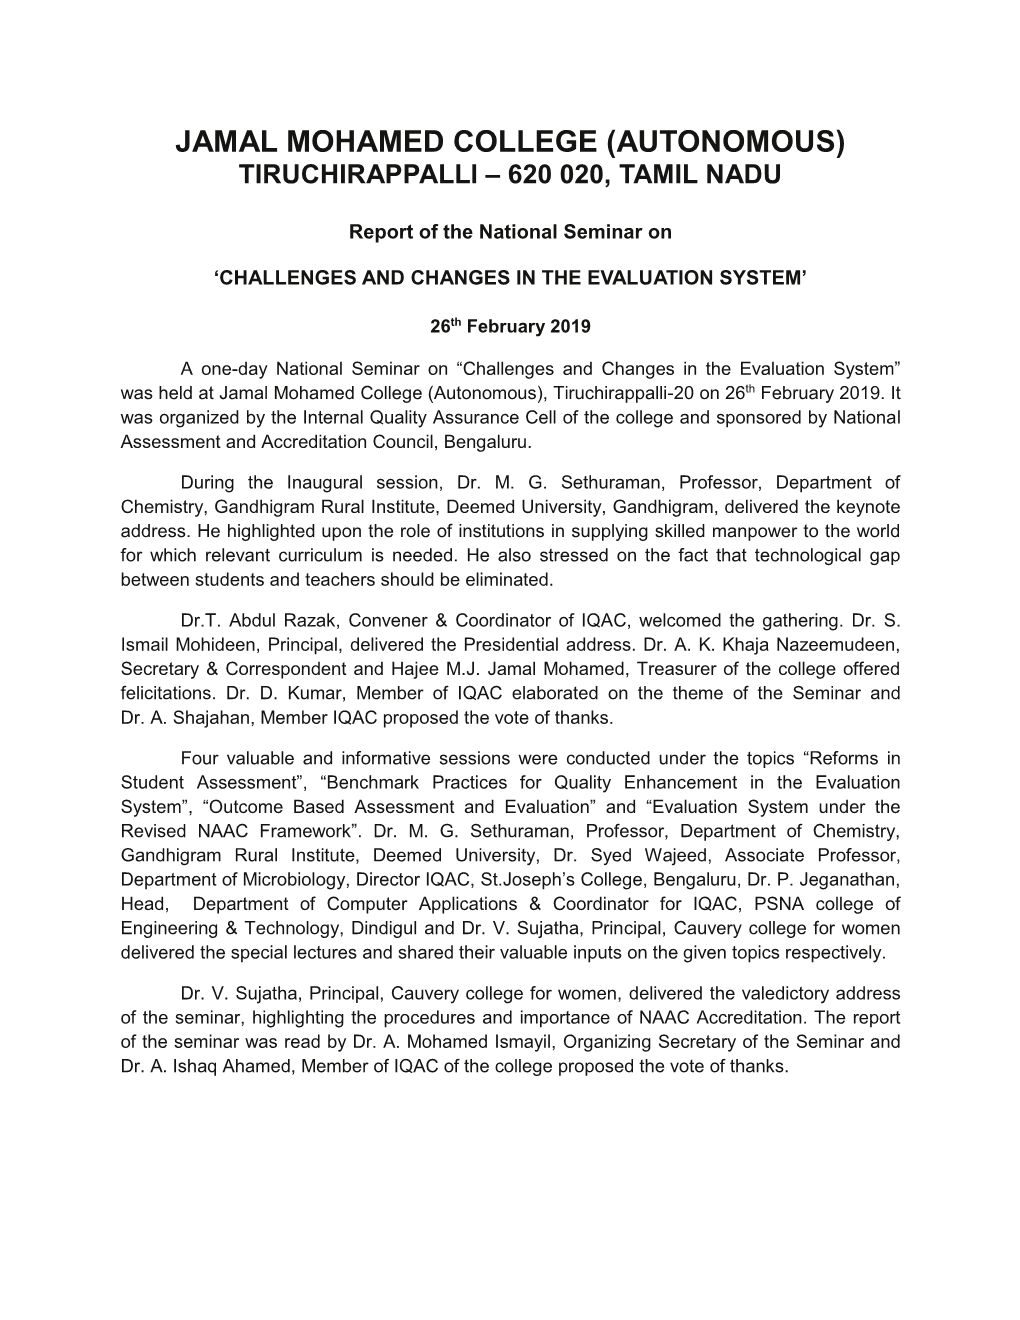 Jamal Mohamed College (Autonomous) Tiruchirappalli – 620 020, Tamil Nadu